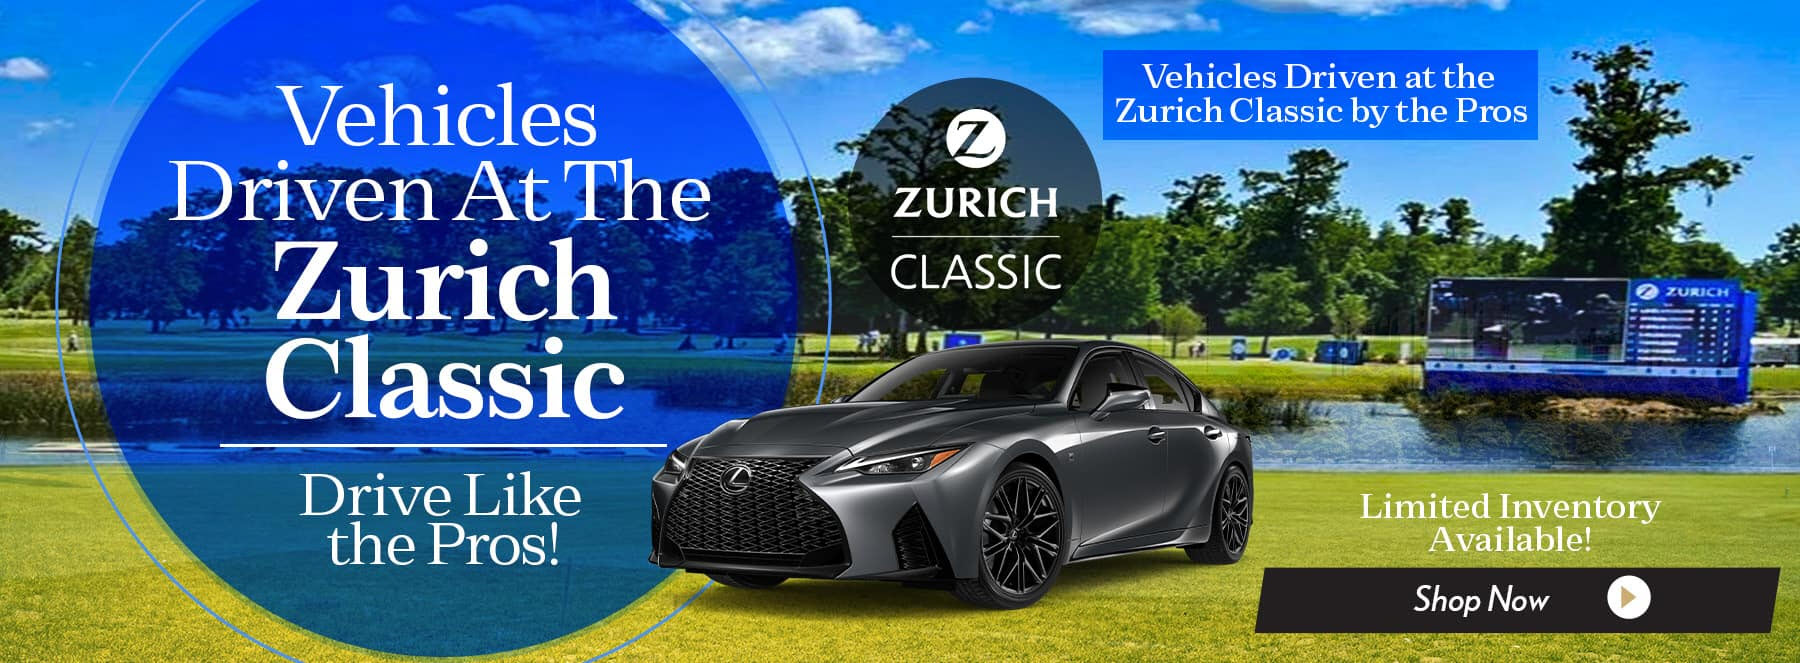 The Zurich Classic